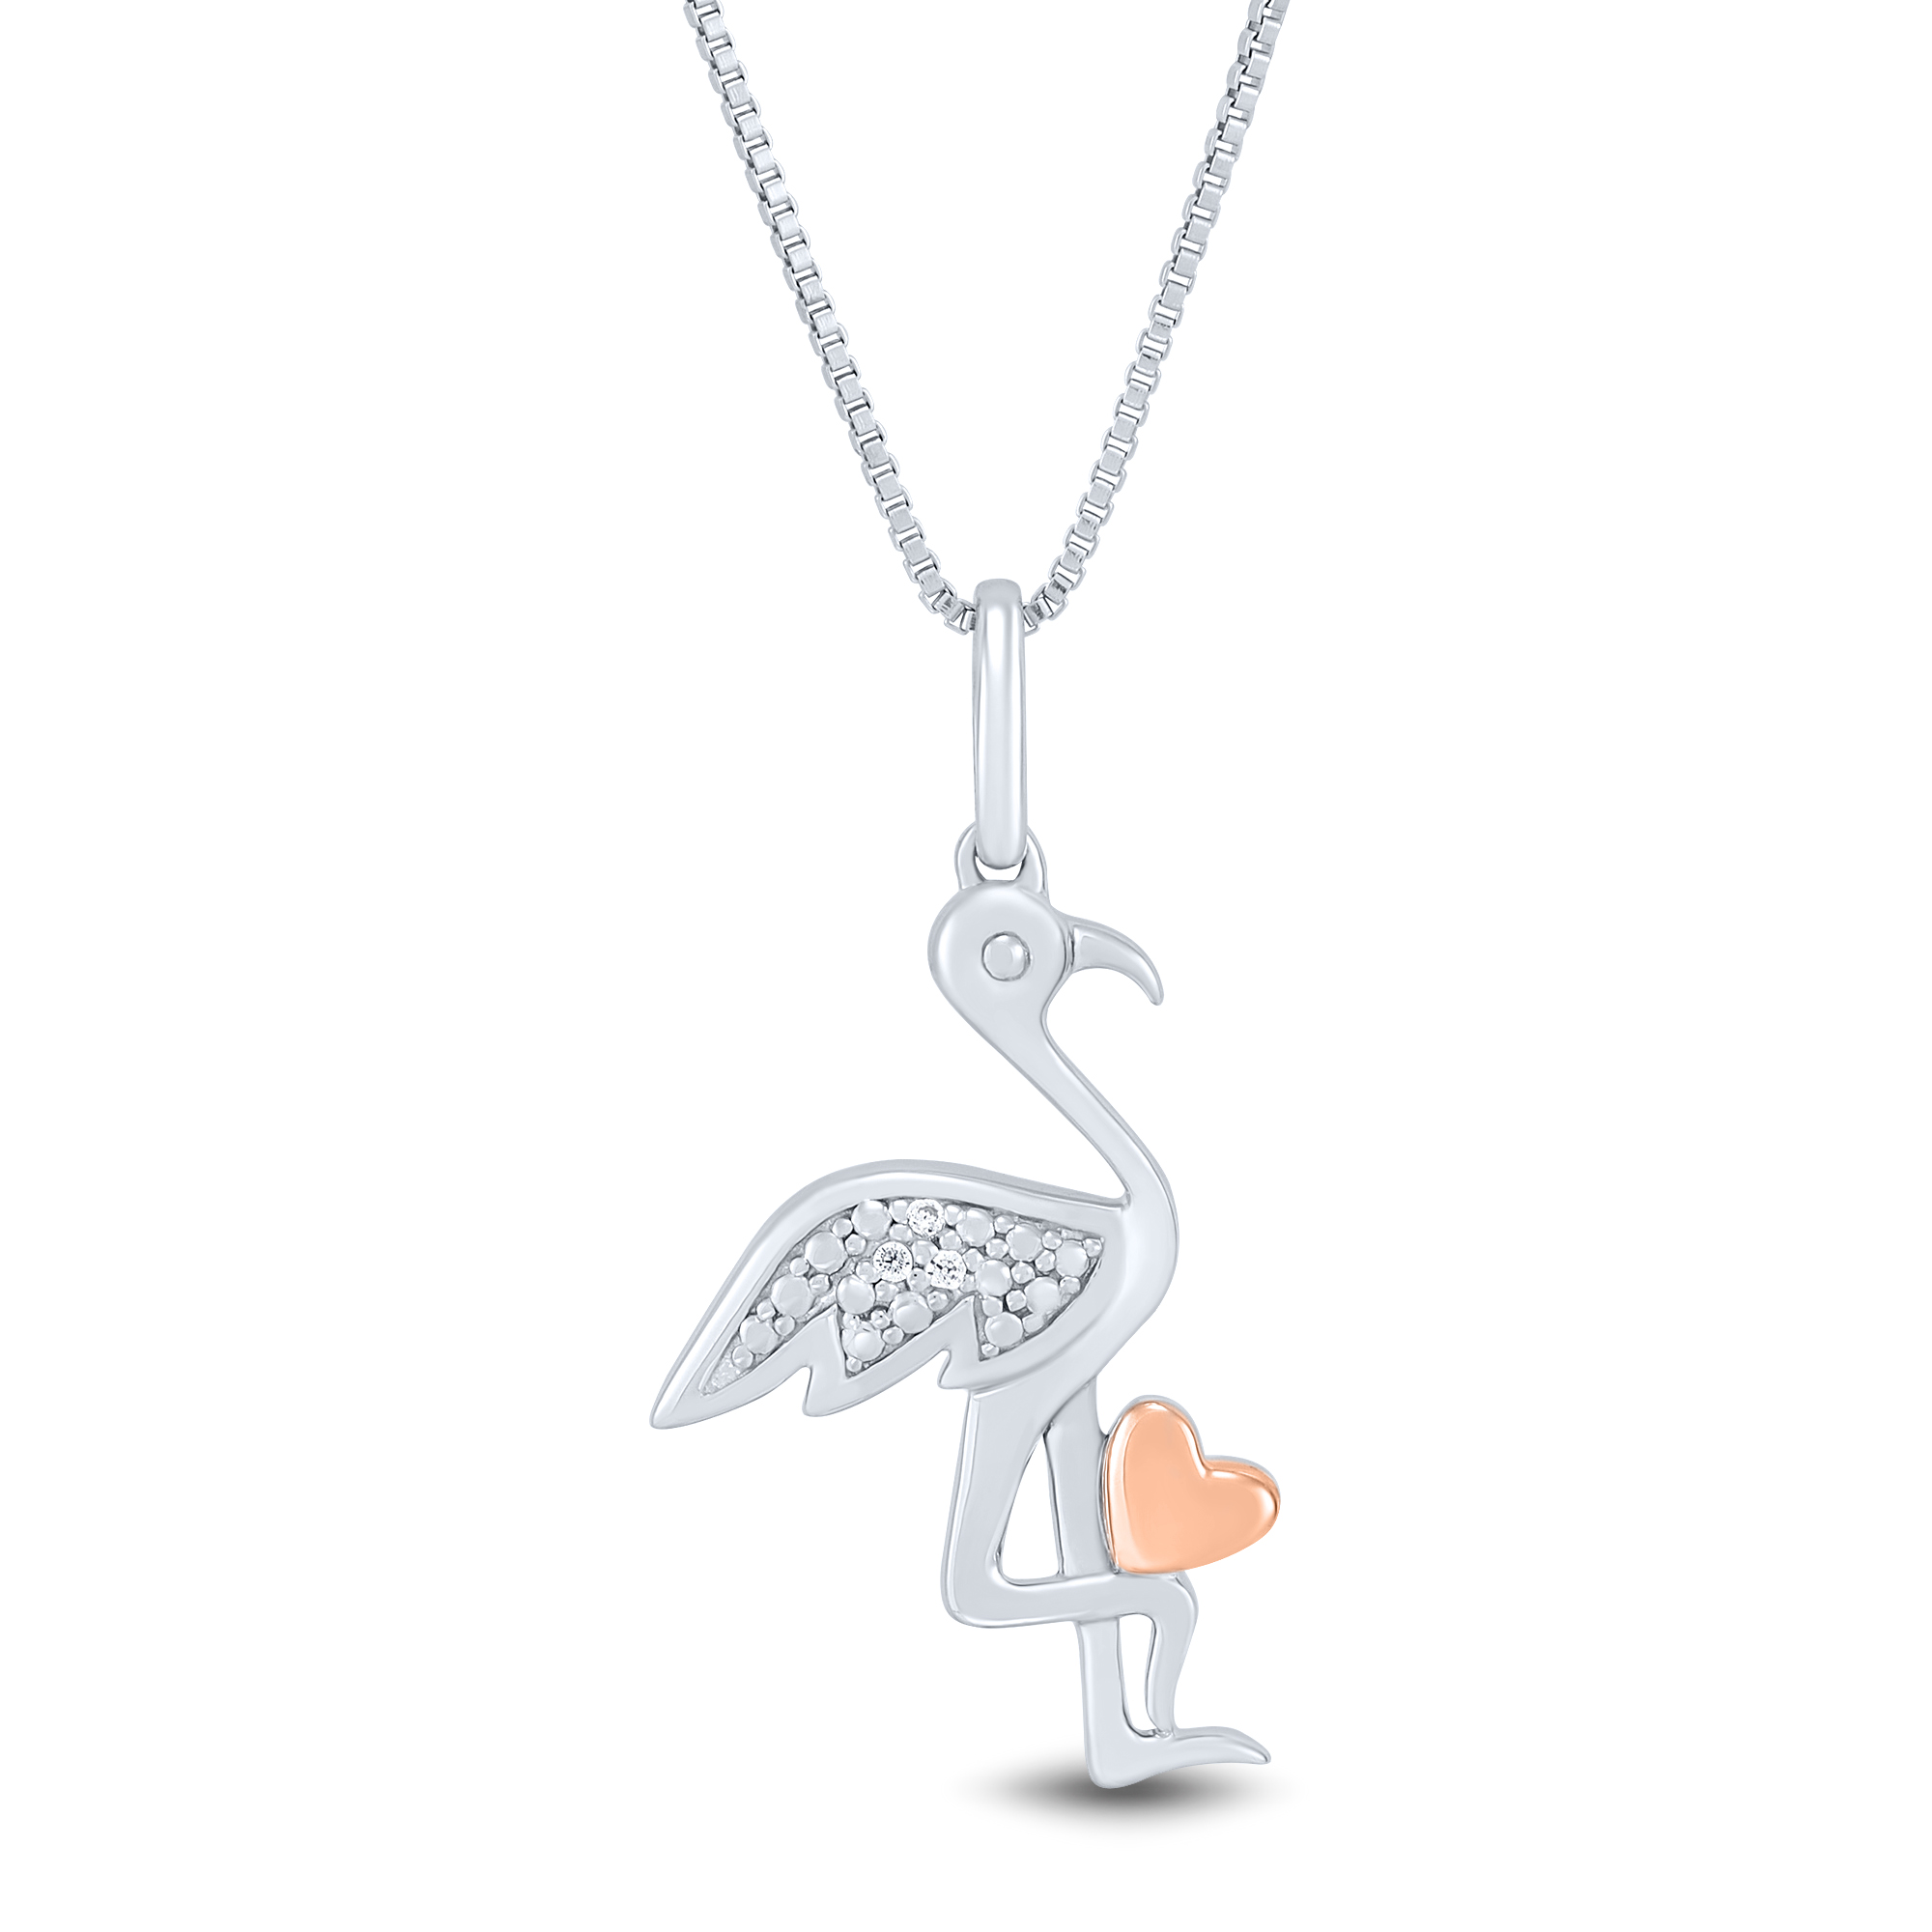 Flamingo Statement Necklace | Necklaces Fashion Flamingo | Flamingo Jewelry  Women - Necklace - Aliexpress